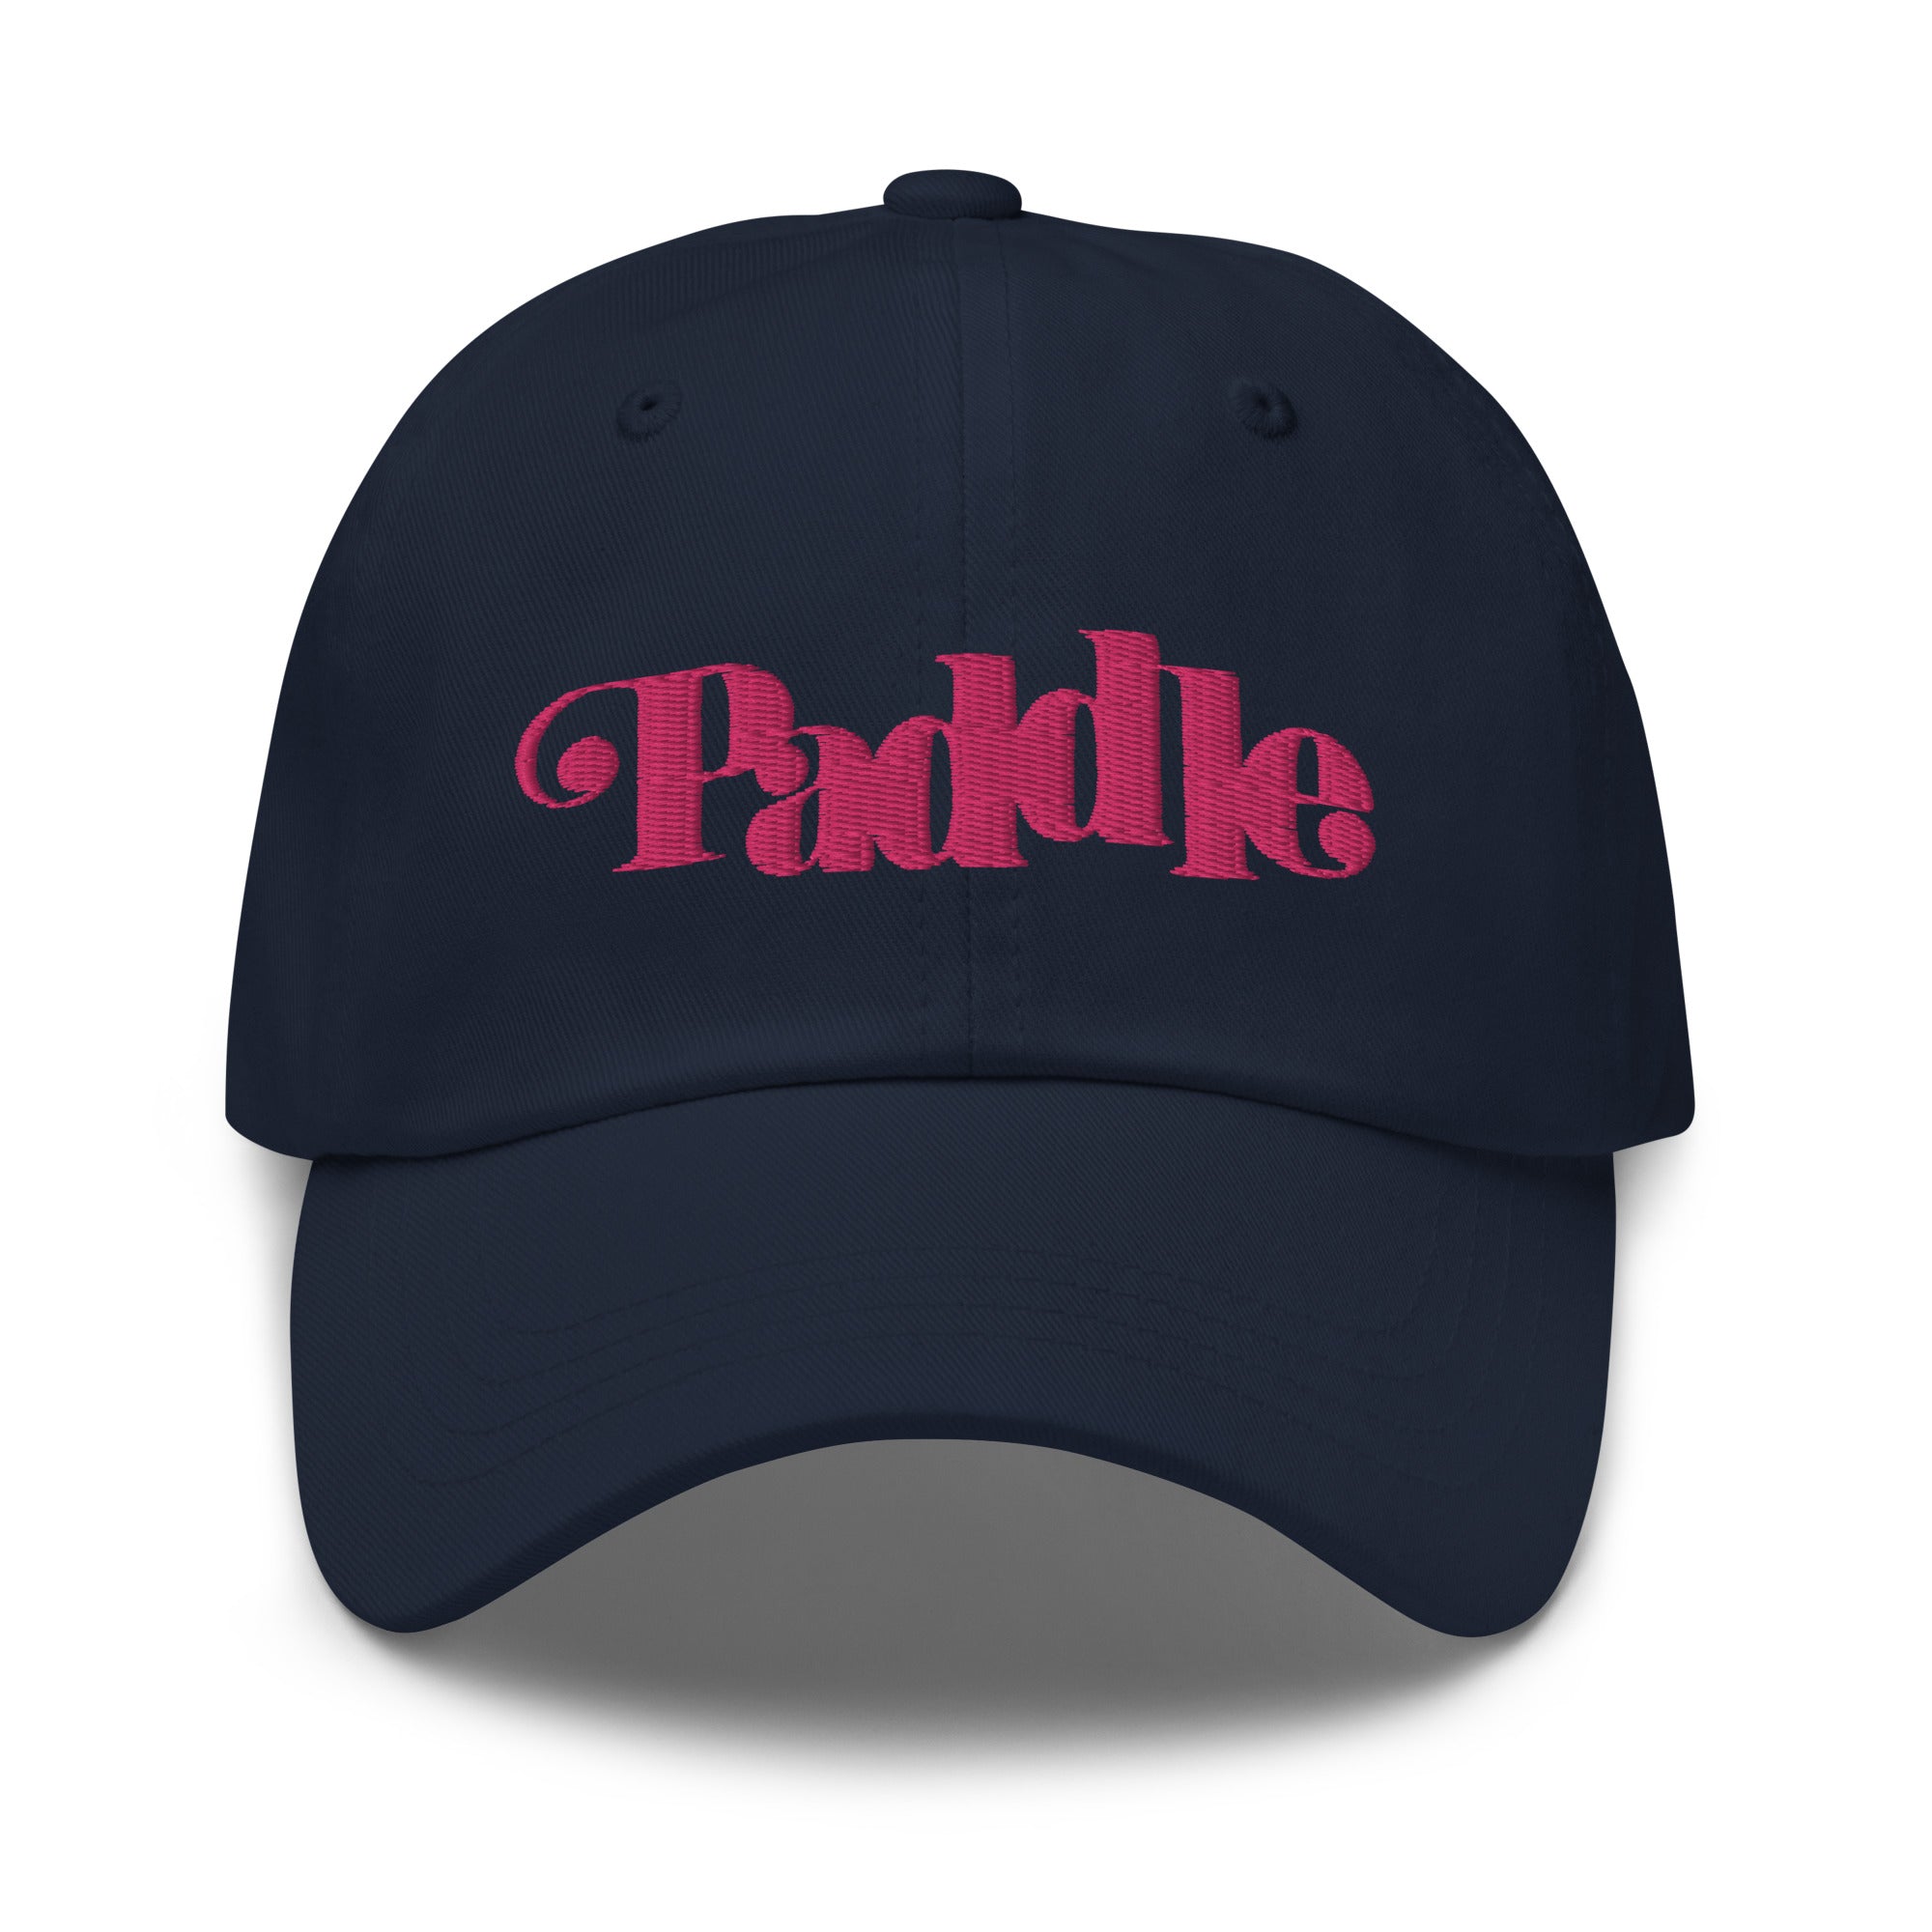 Paddle Dad hat